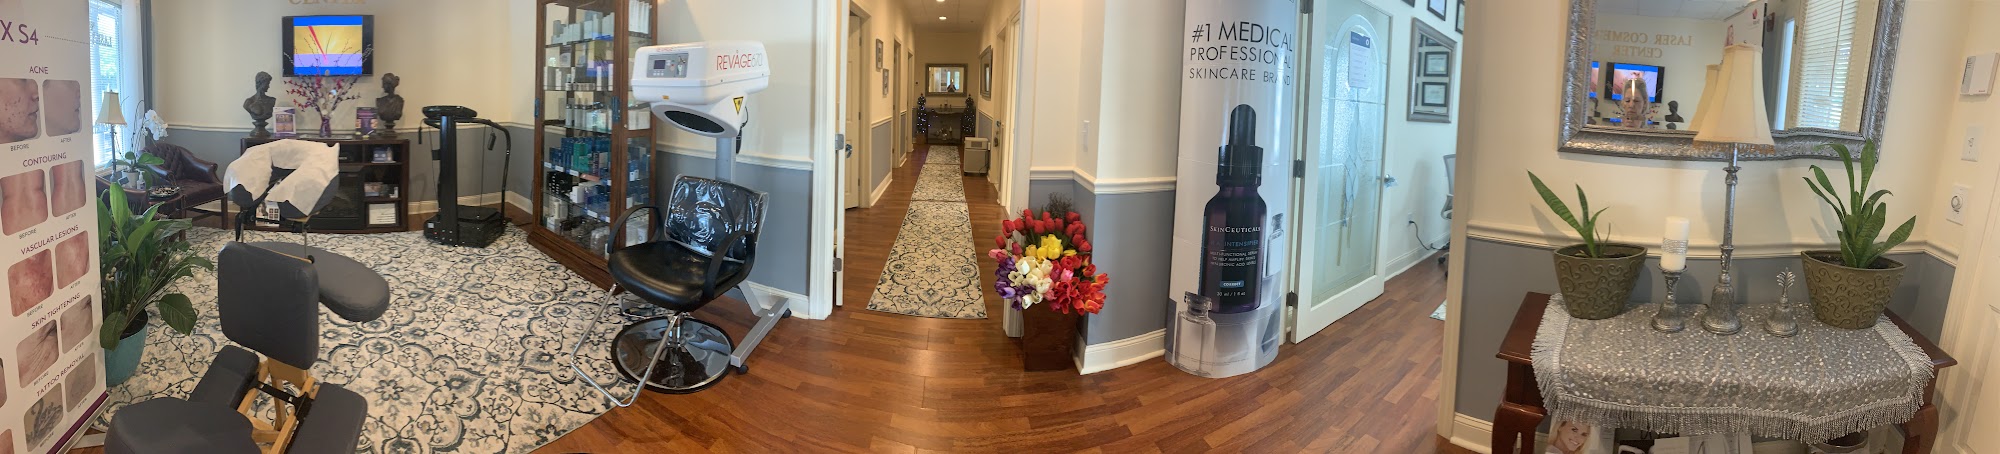 Michele's Massage Studio / Laser Cosmetic Center 163 Washington St, North Easton Massachusetts 02356